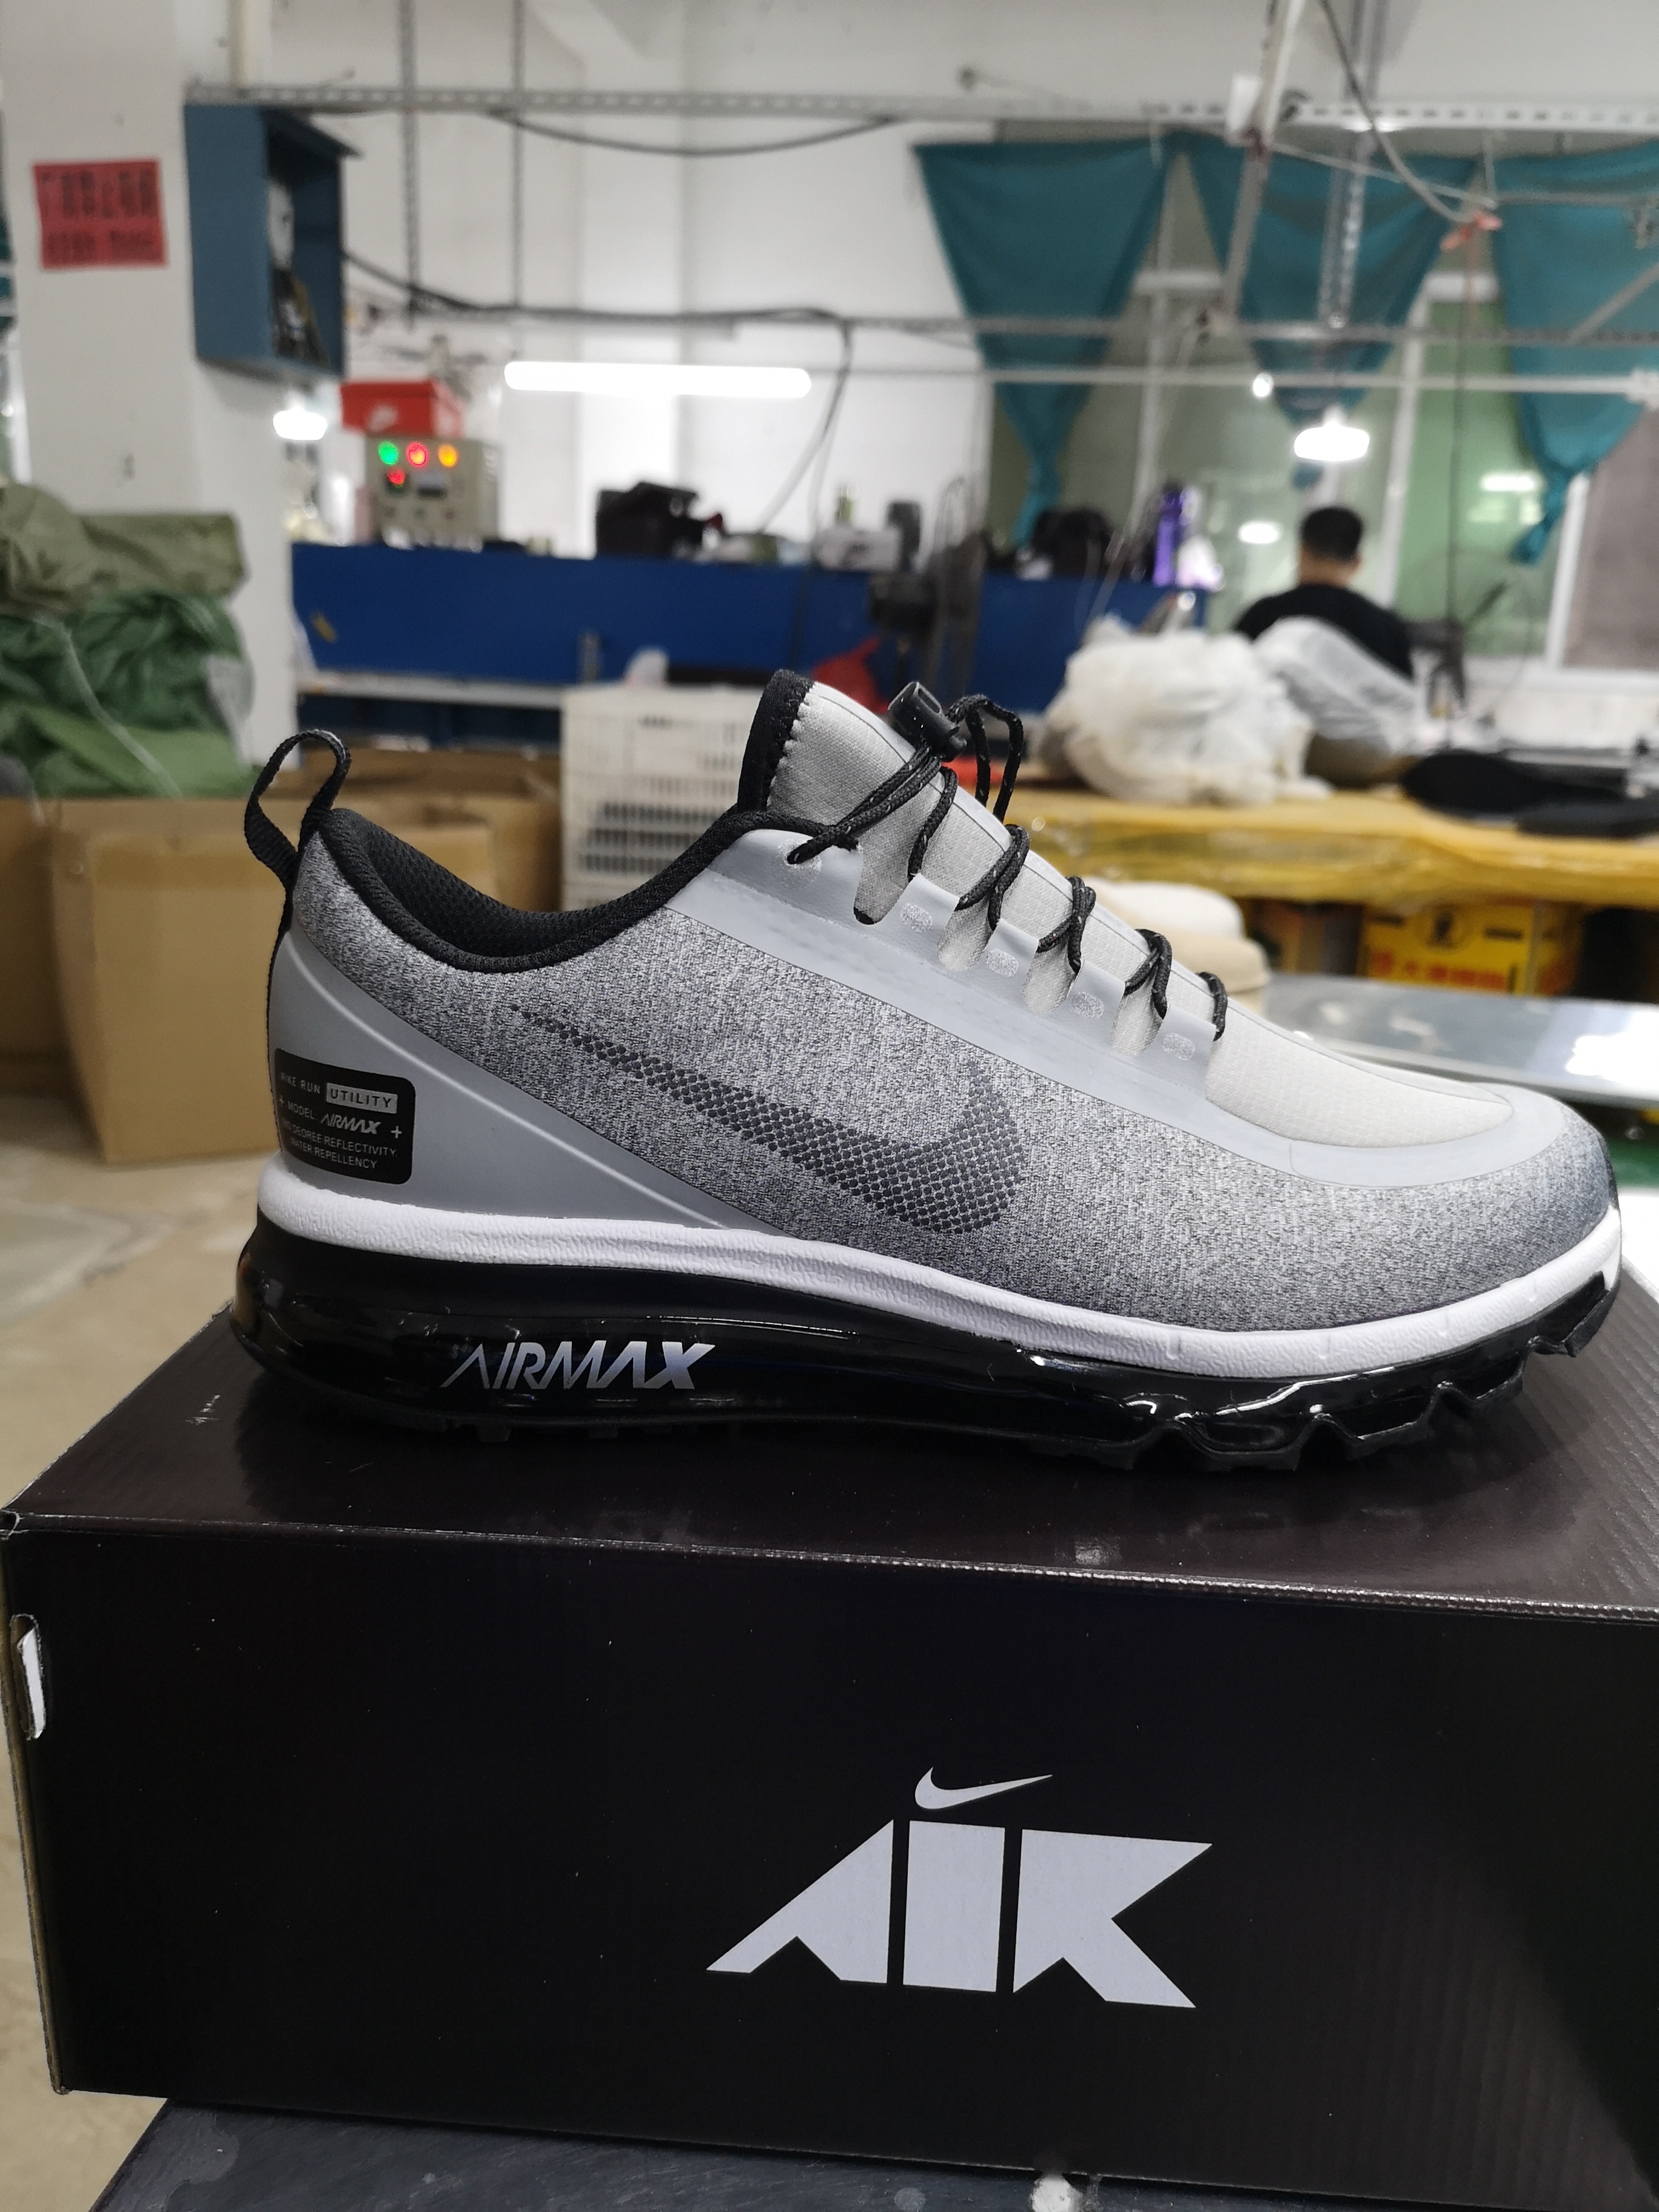 Nike Air Max 2017 Waterproof Grey Black Shoes - Click Image to Close